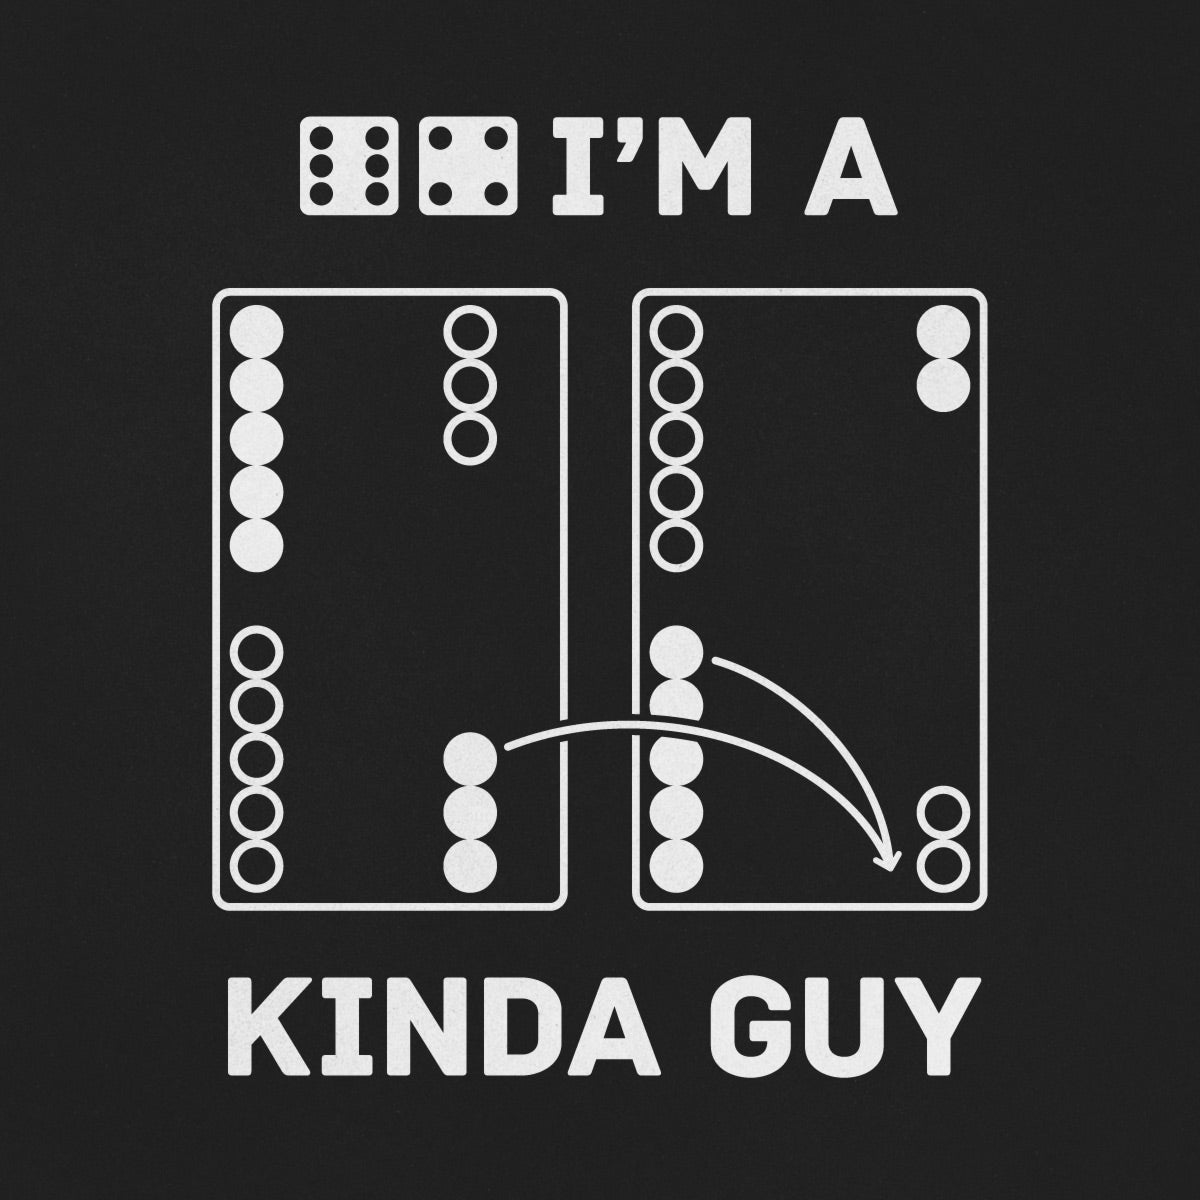 I’m a XY kinda guy, Backgammon T-shirt, Unisex - Backgammon Galaxy S / 64: (8/2, 6/2) T-shirt